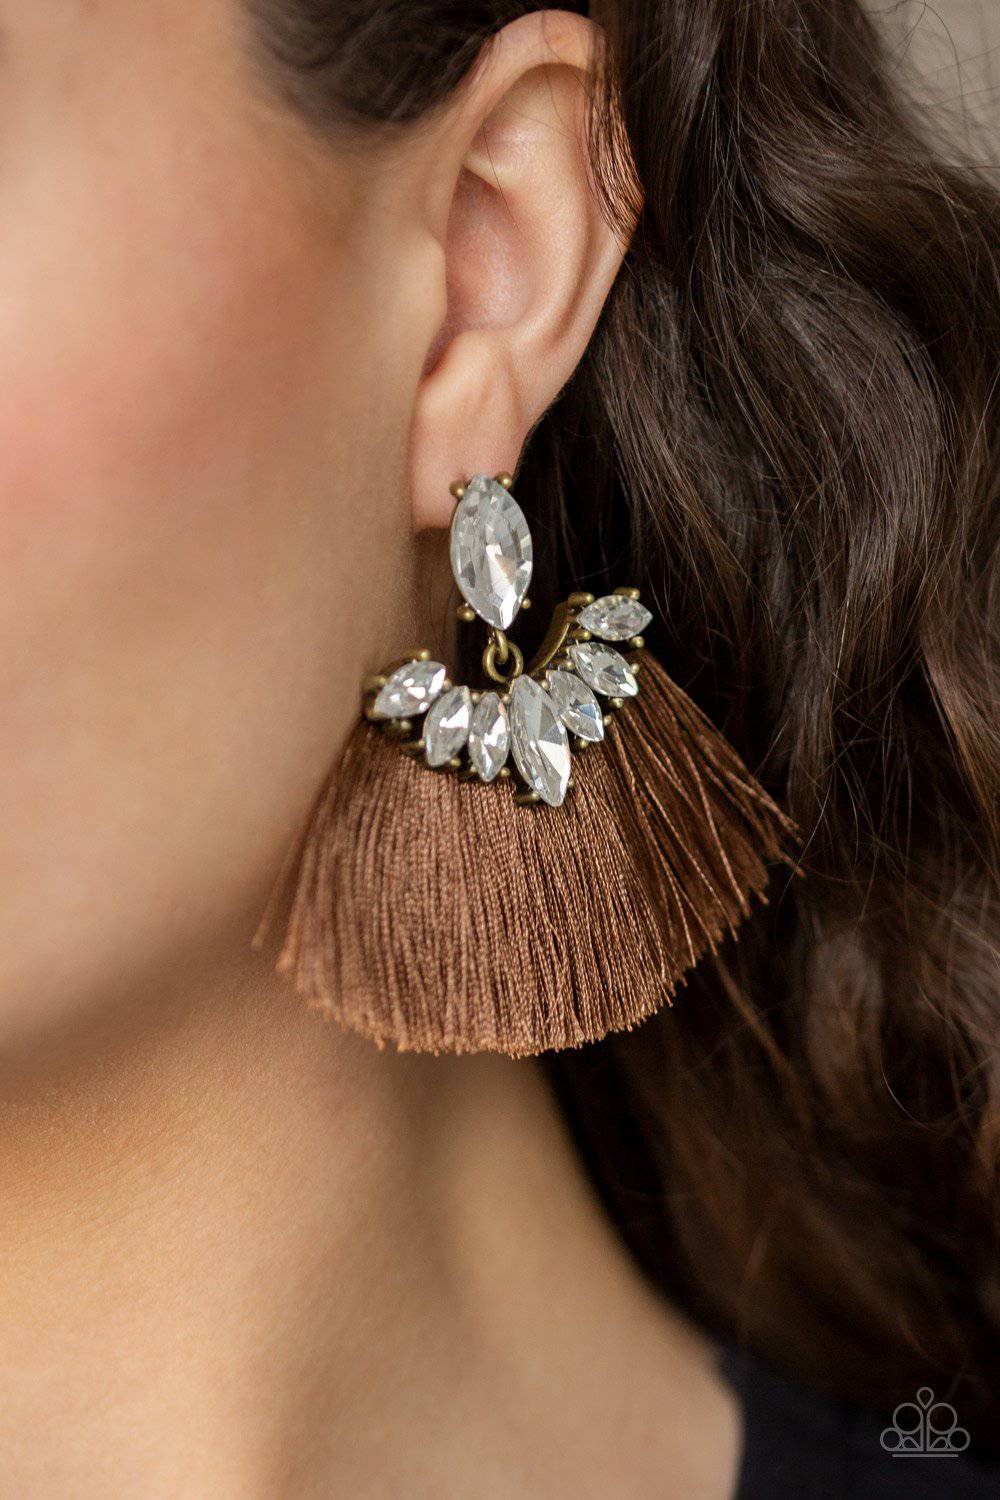 Formal Flair - Brown Rhinestone Fringe Earrings - Paparazzi Accessories - GlaMarous Titi Jewels